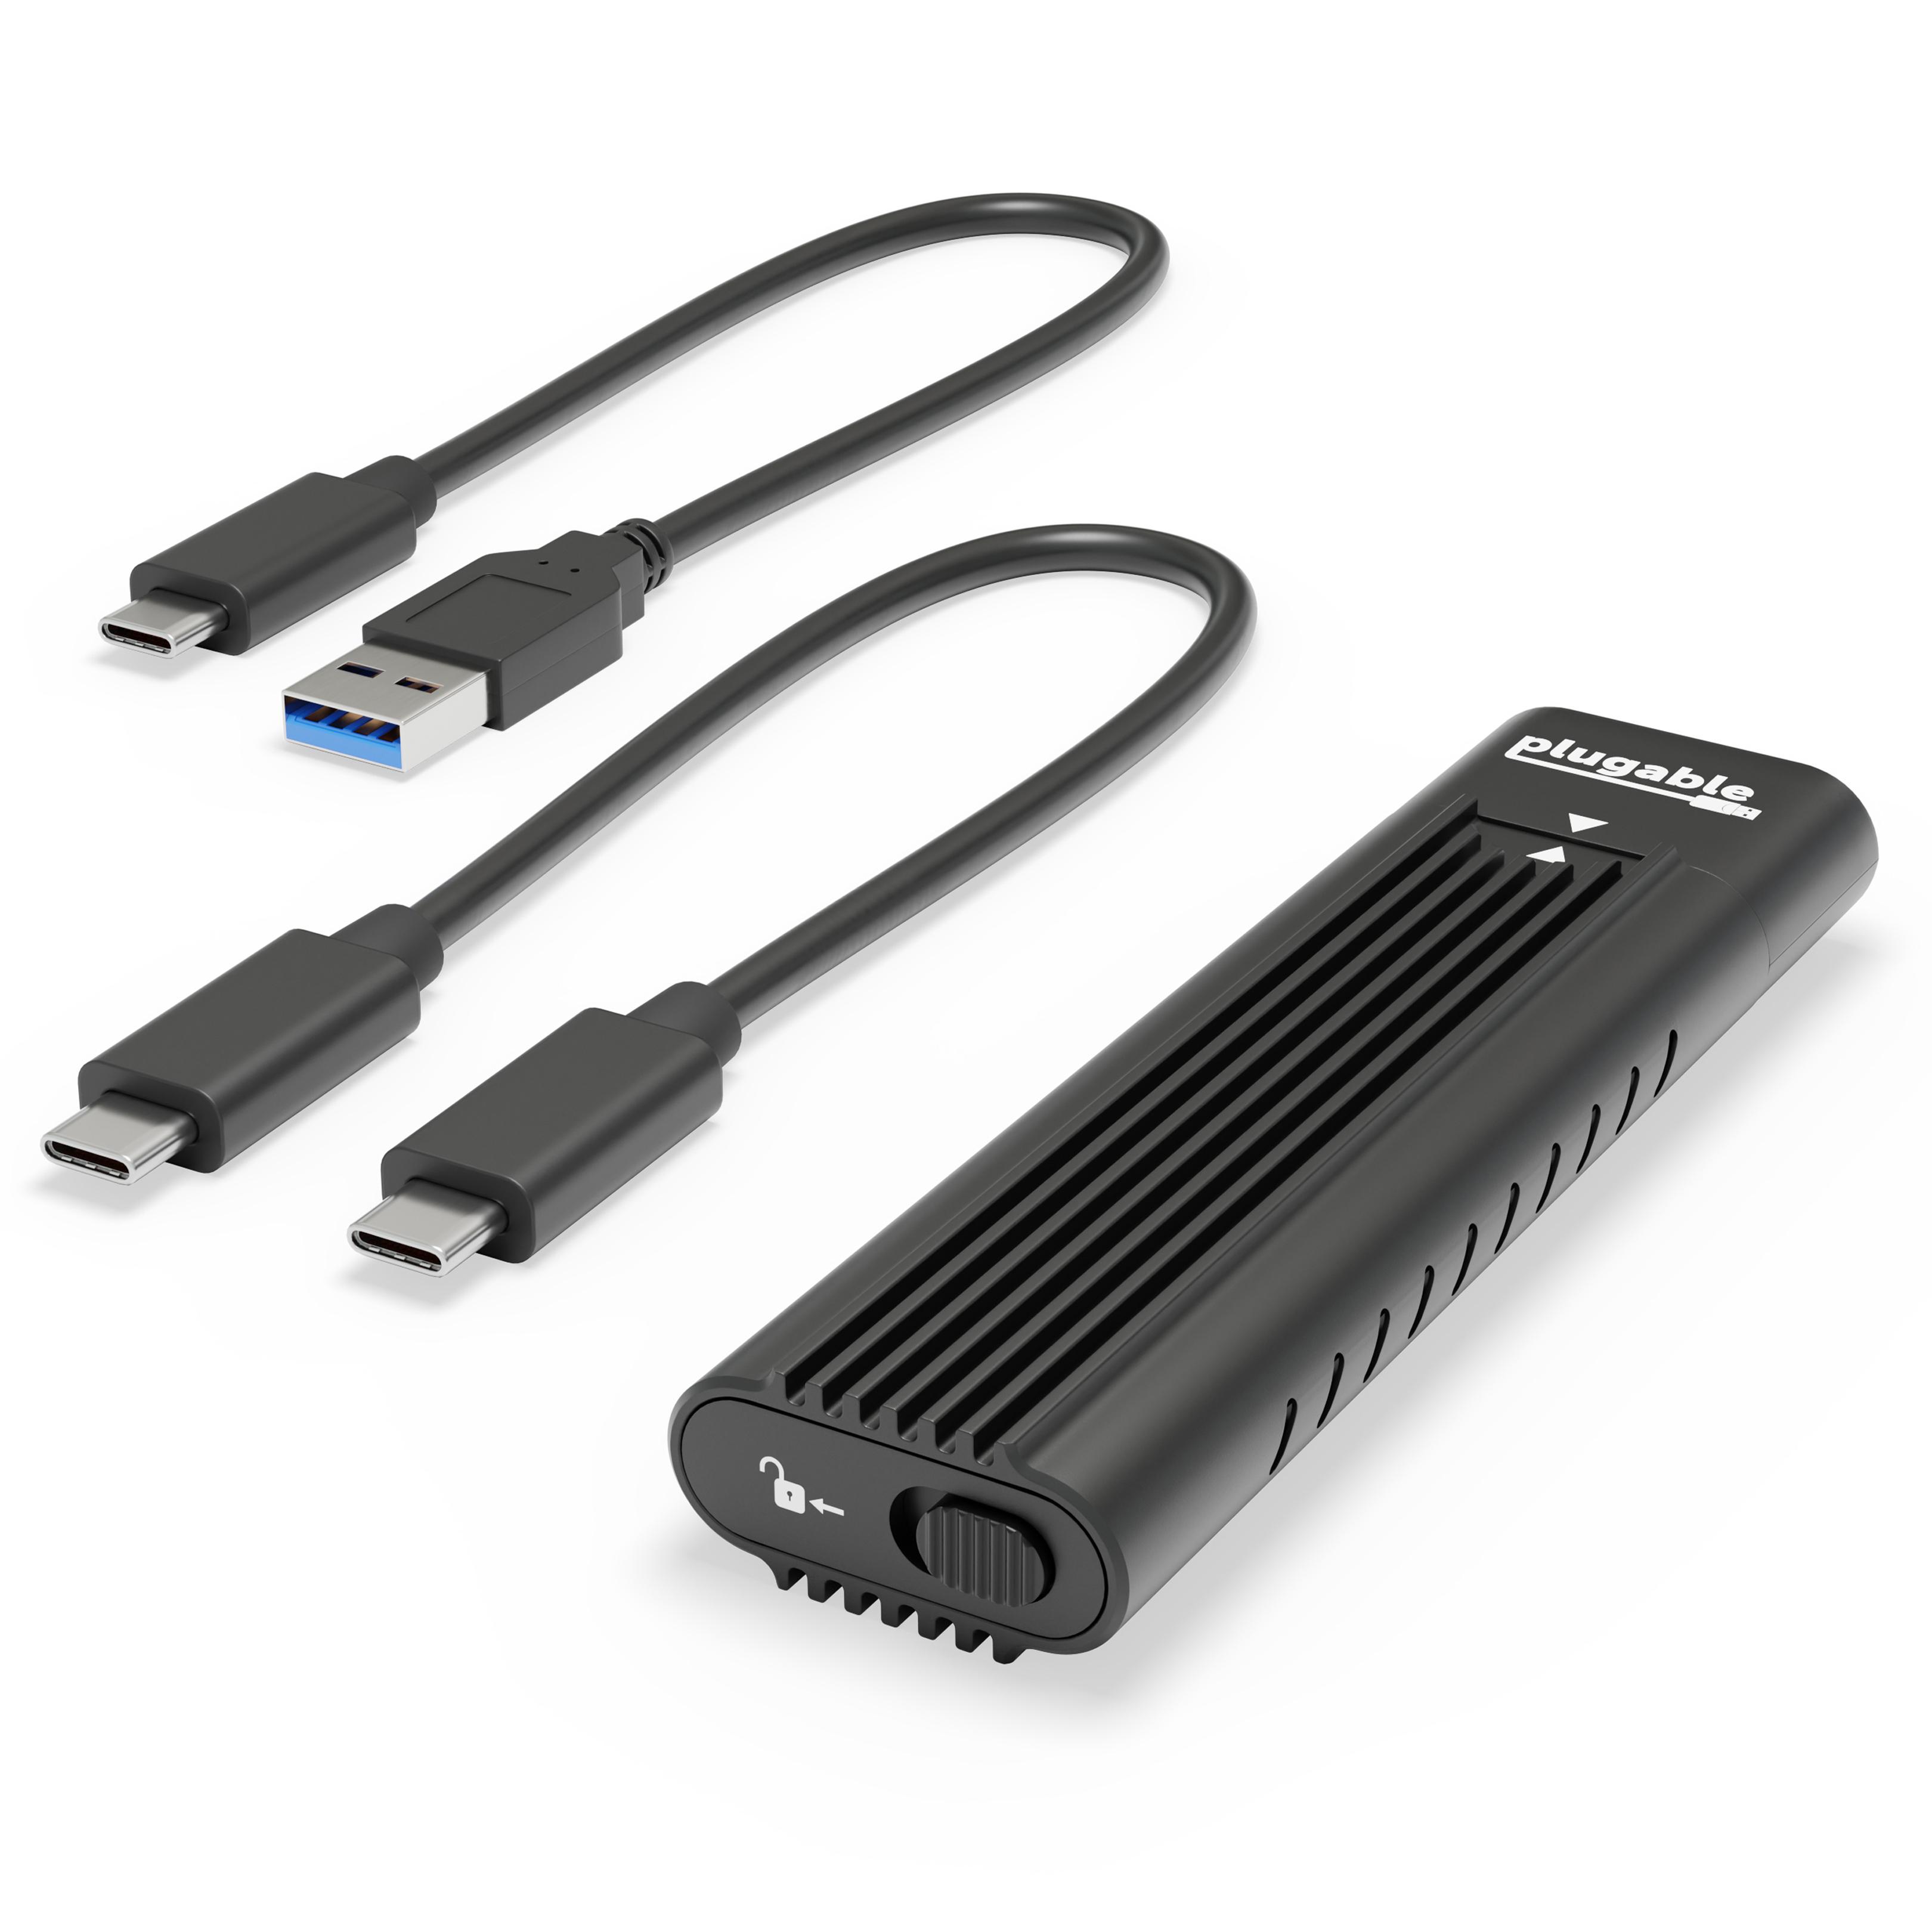 Plugable USB 3.1 Gen 2 Tool-free NVMe Enclosure